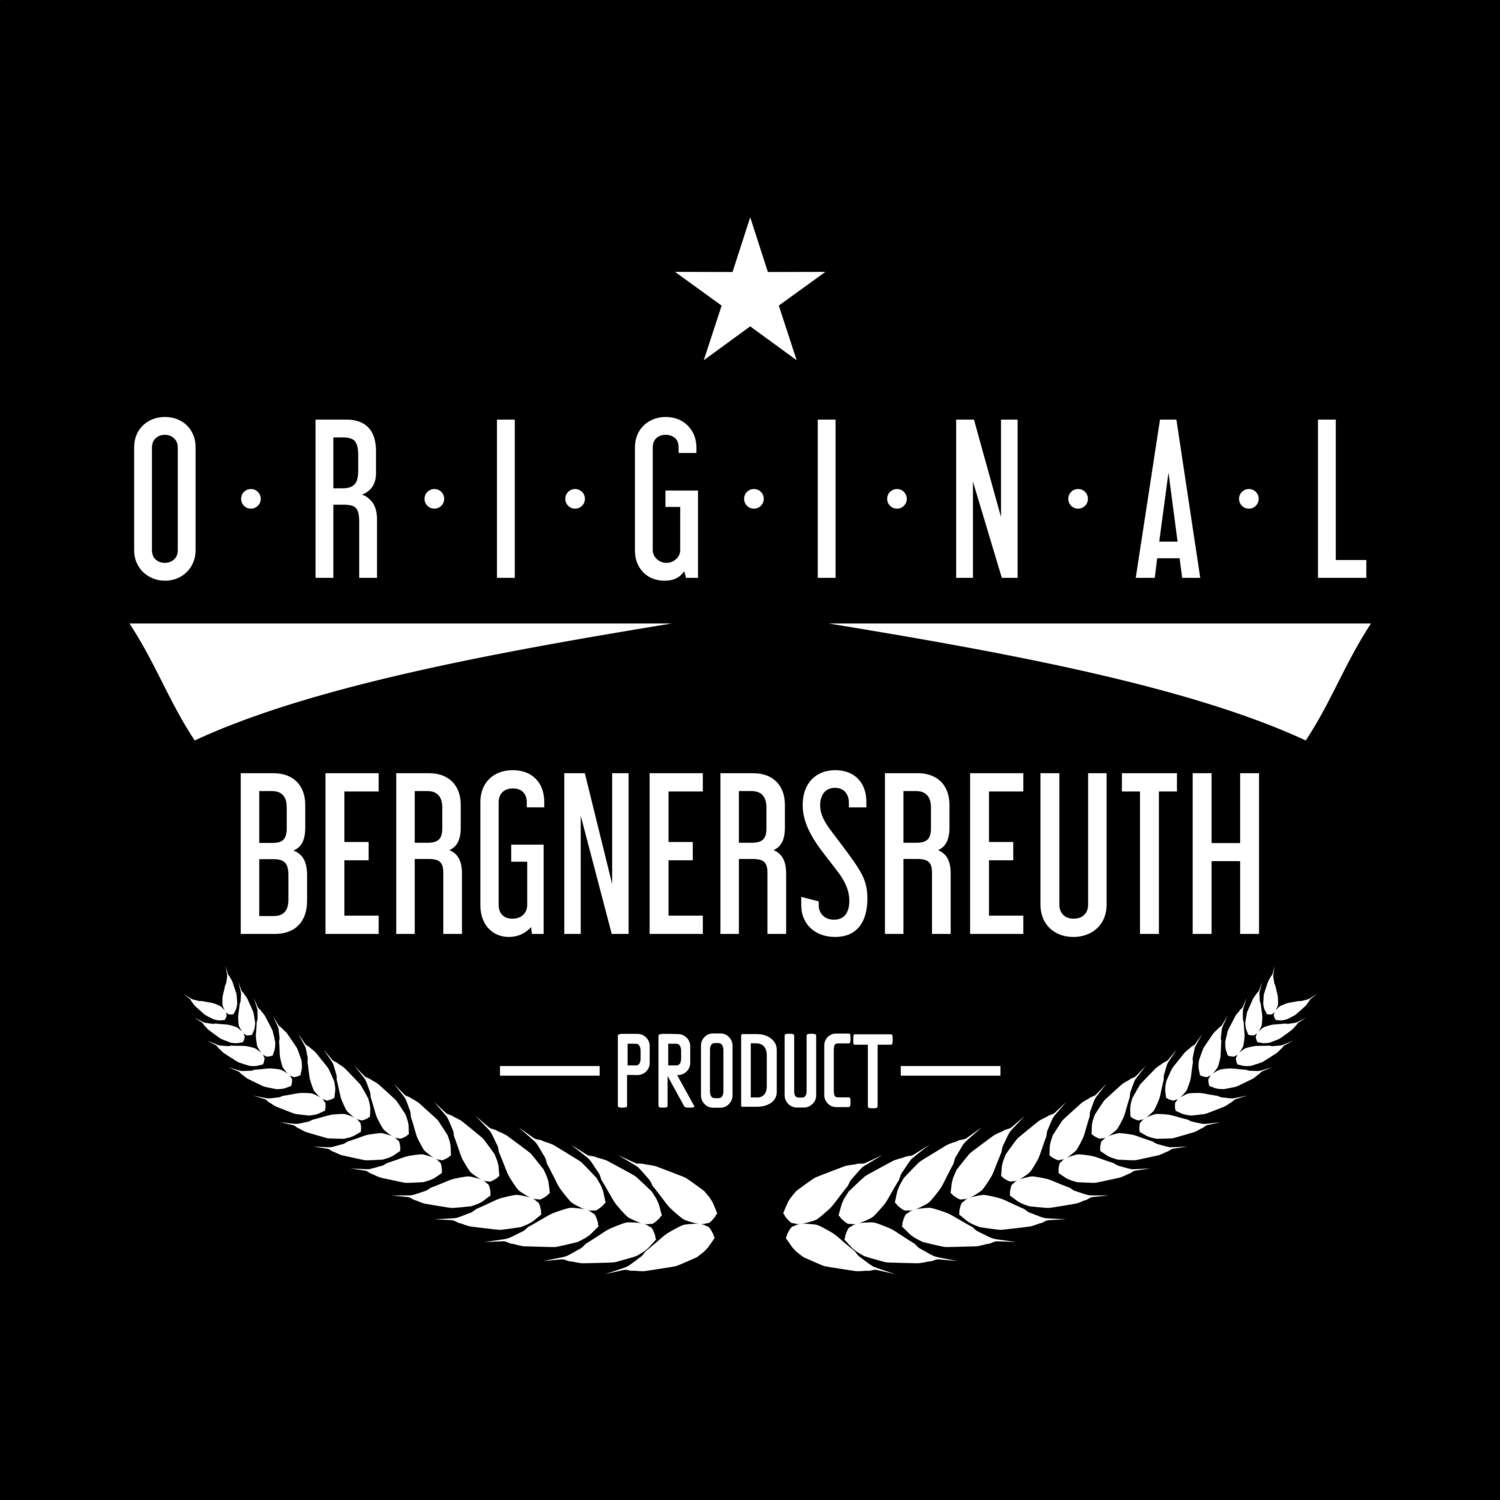 Bergnersreuth T-Shirt »Original Product«